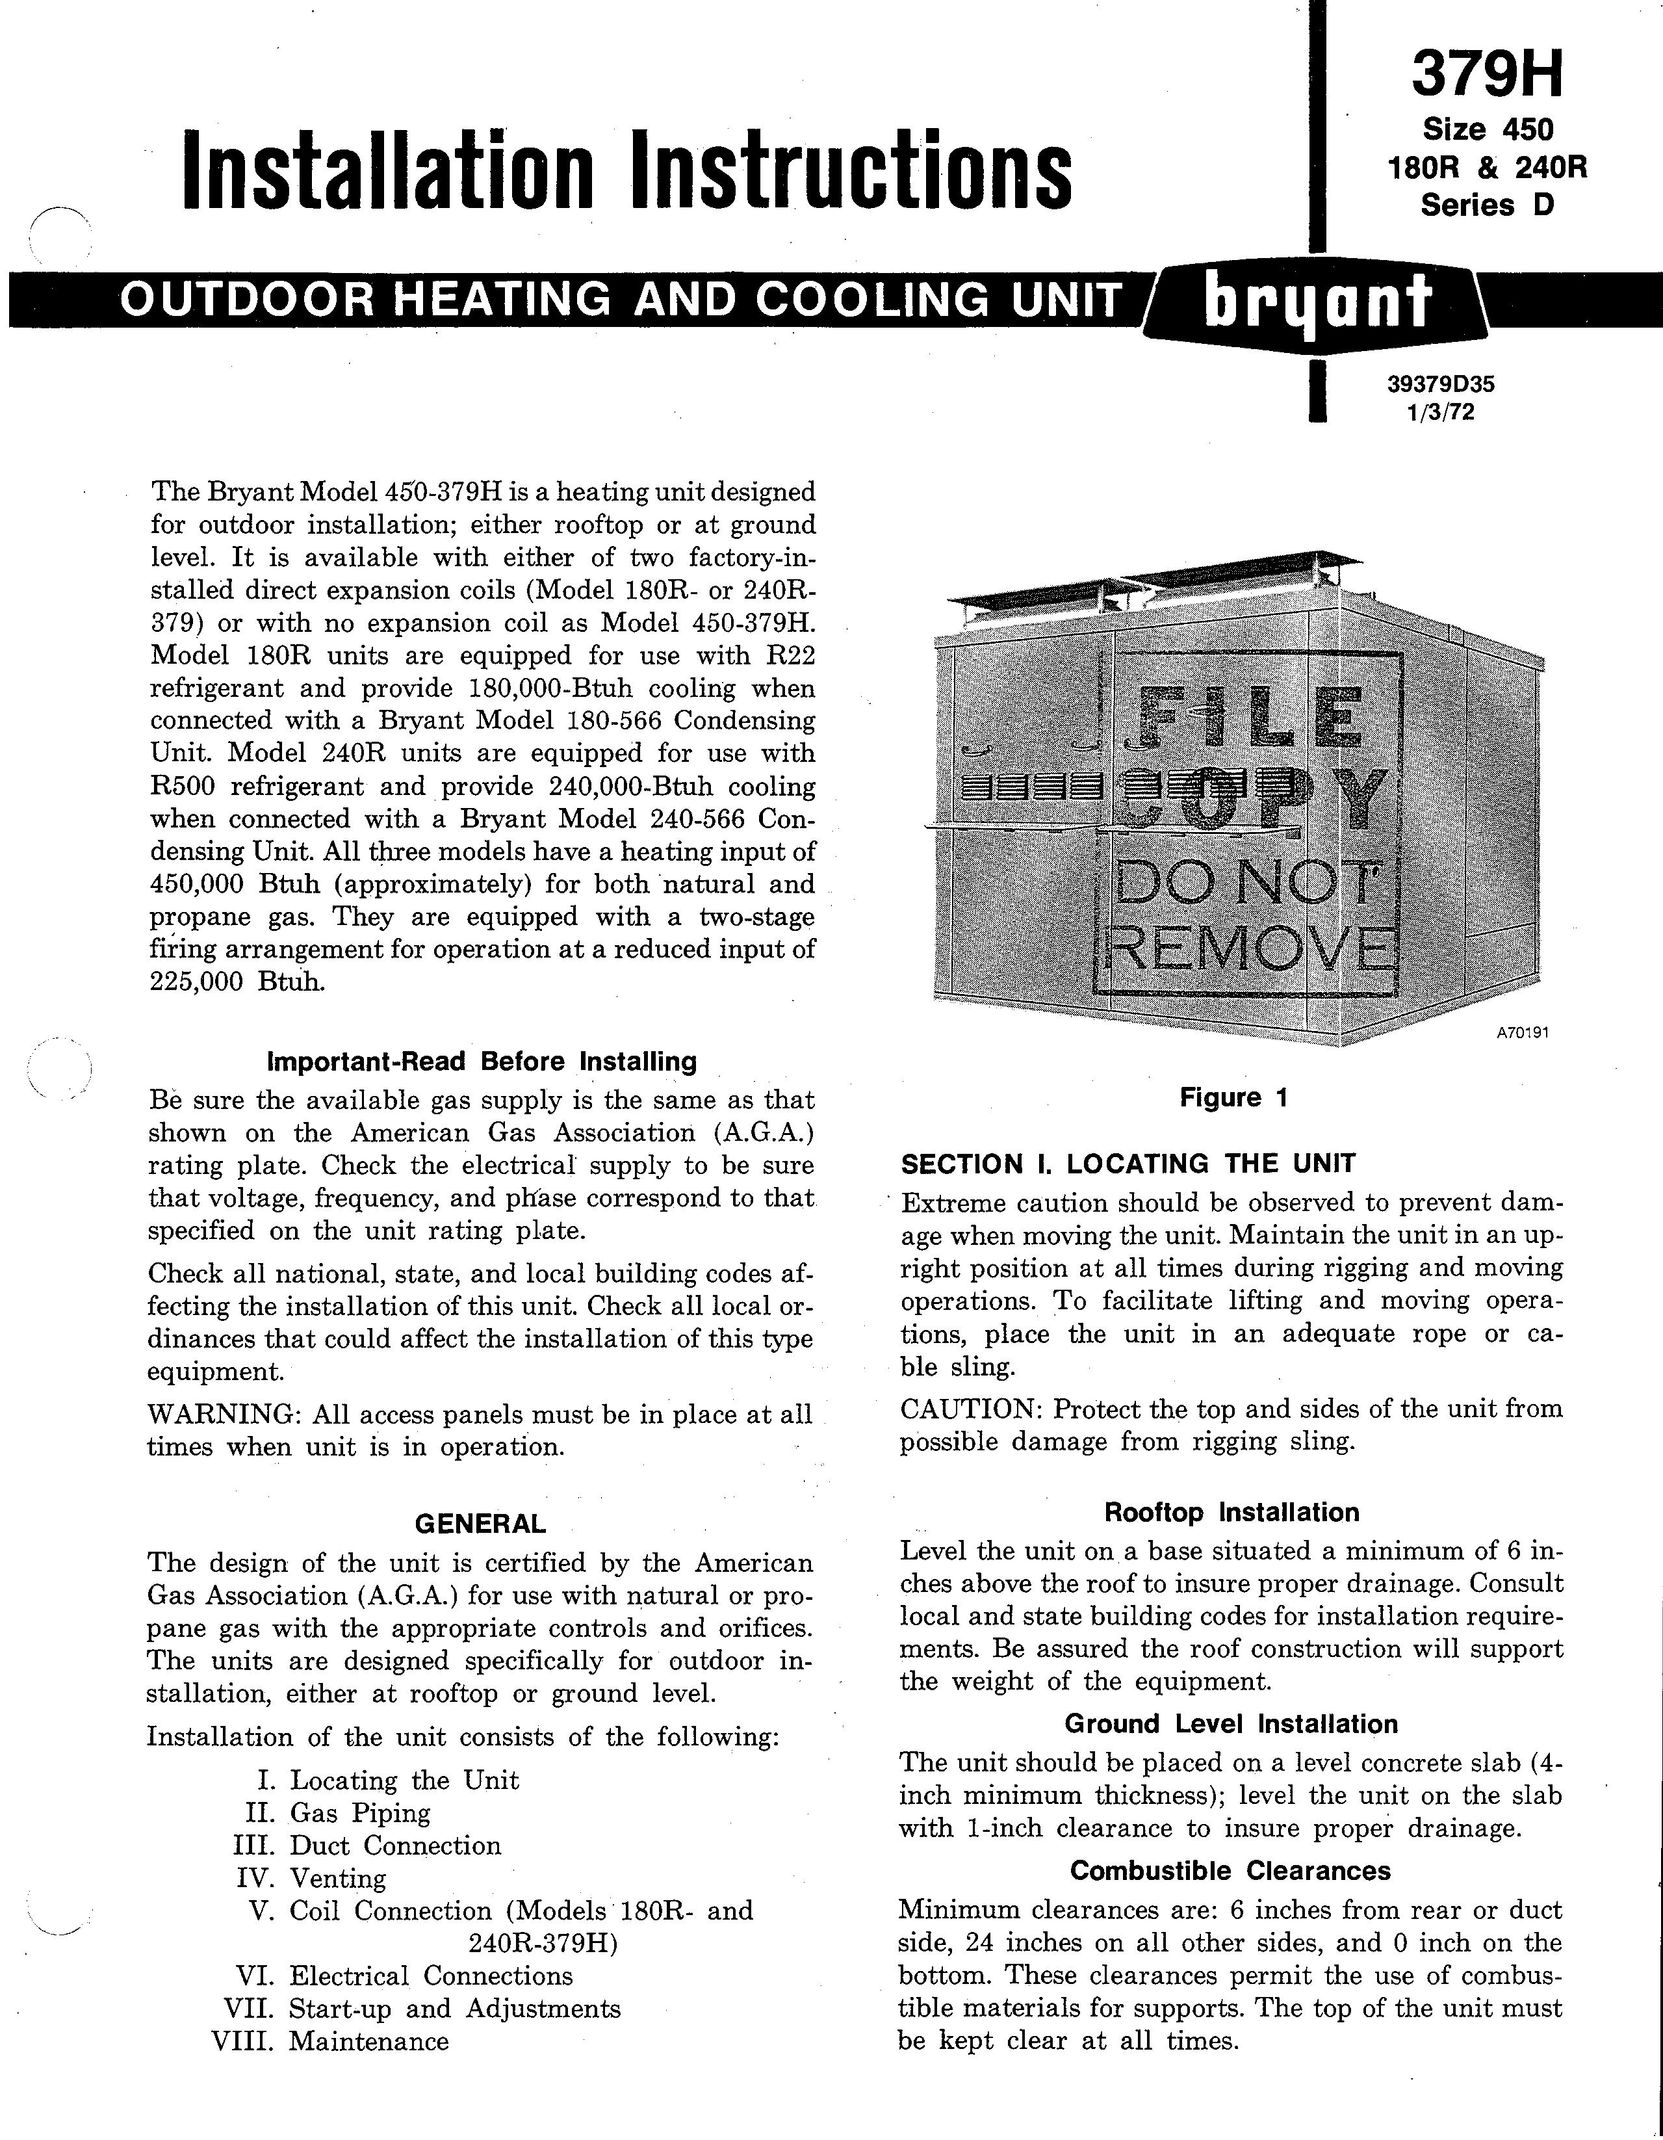 Bryant 379H Heating System User Manual